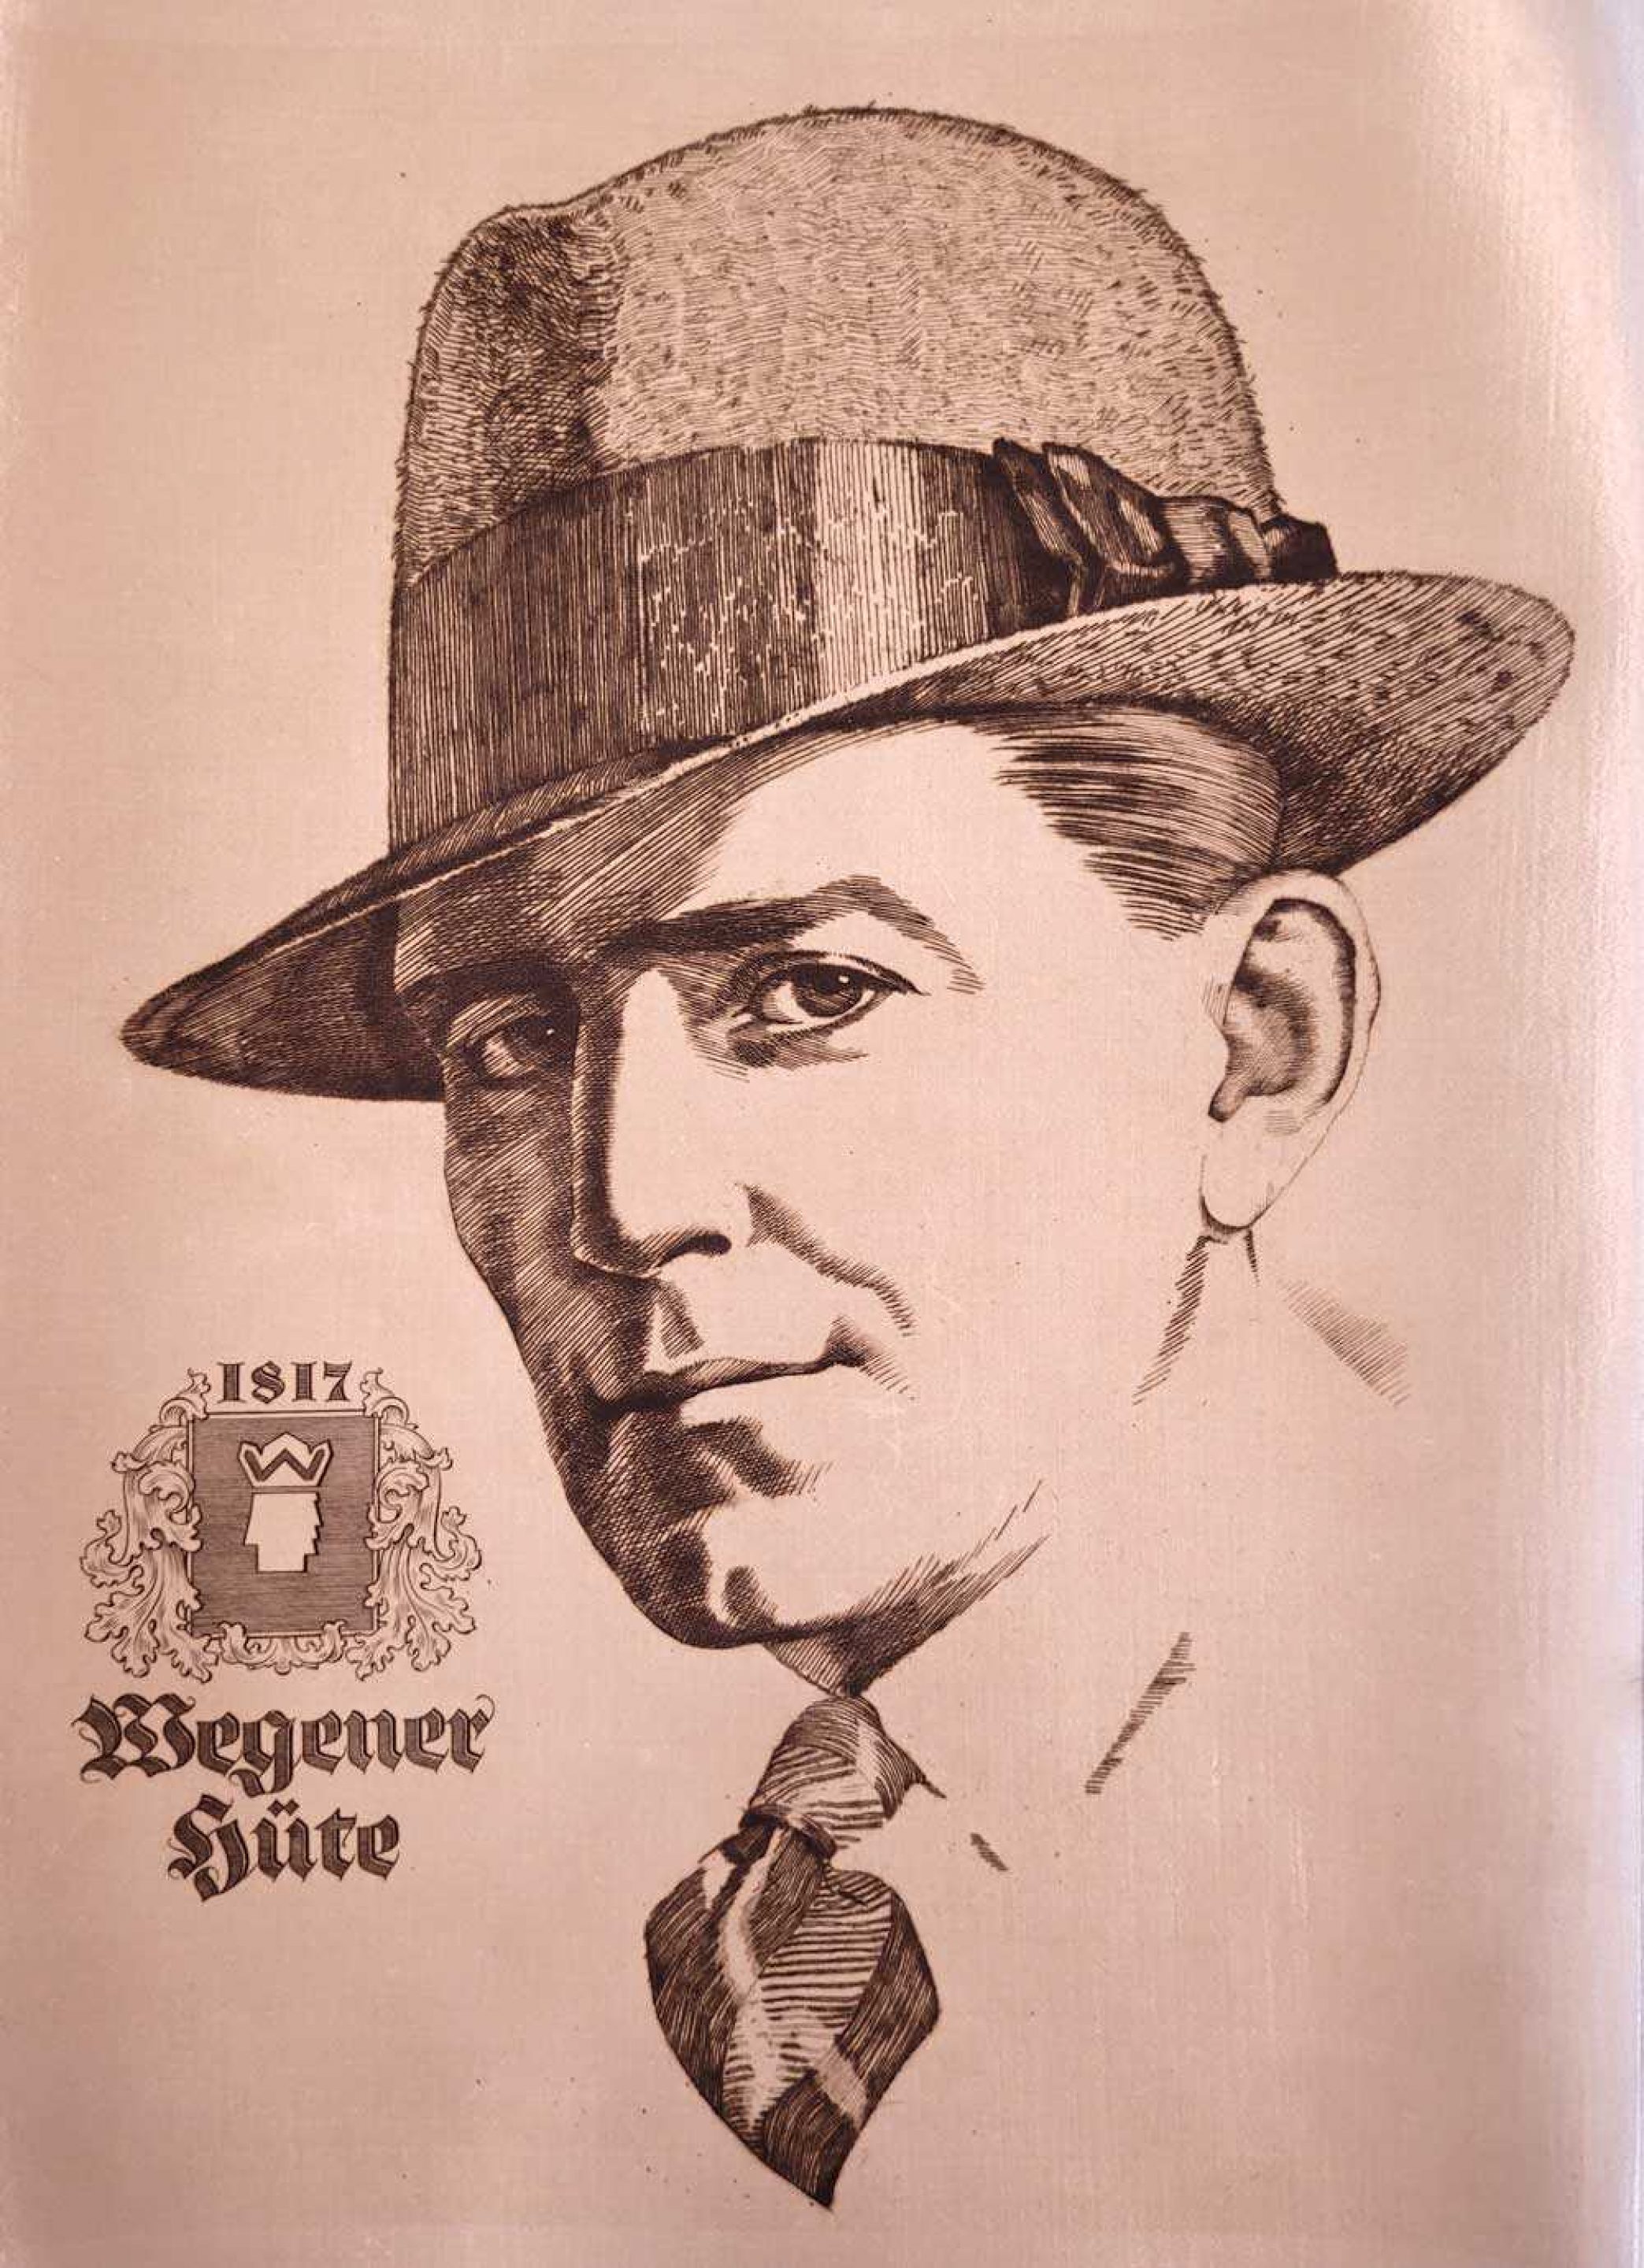 Wegener Werbung 1935 web